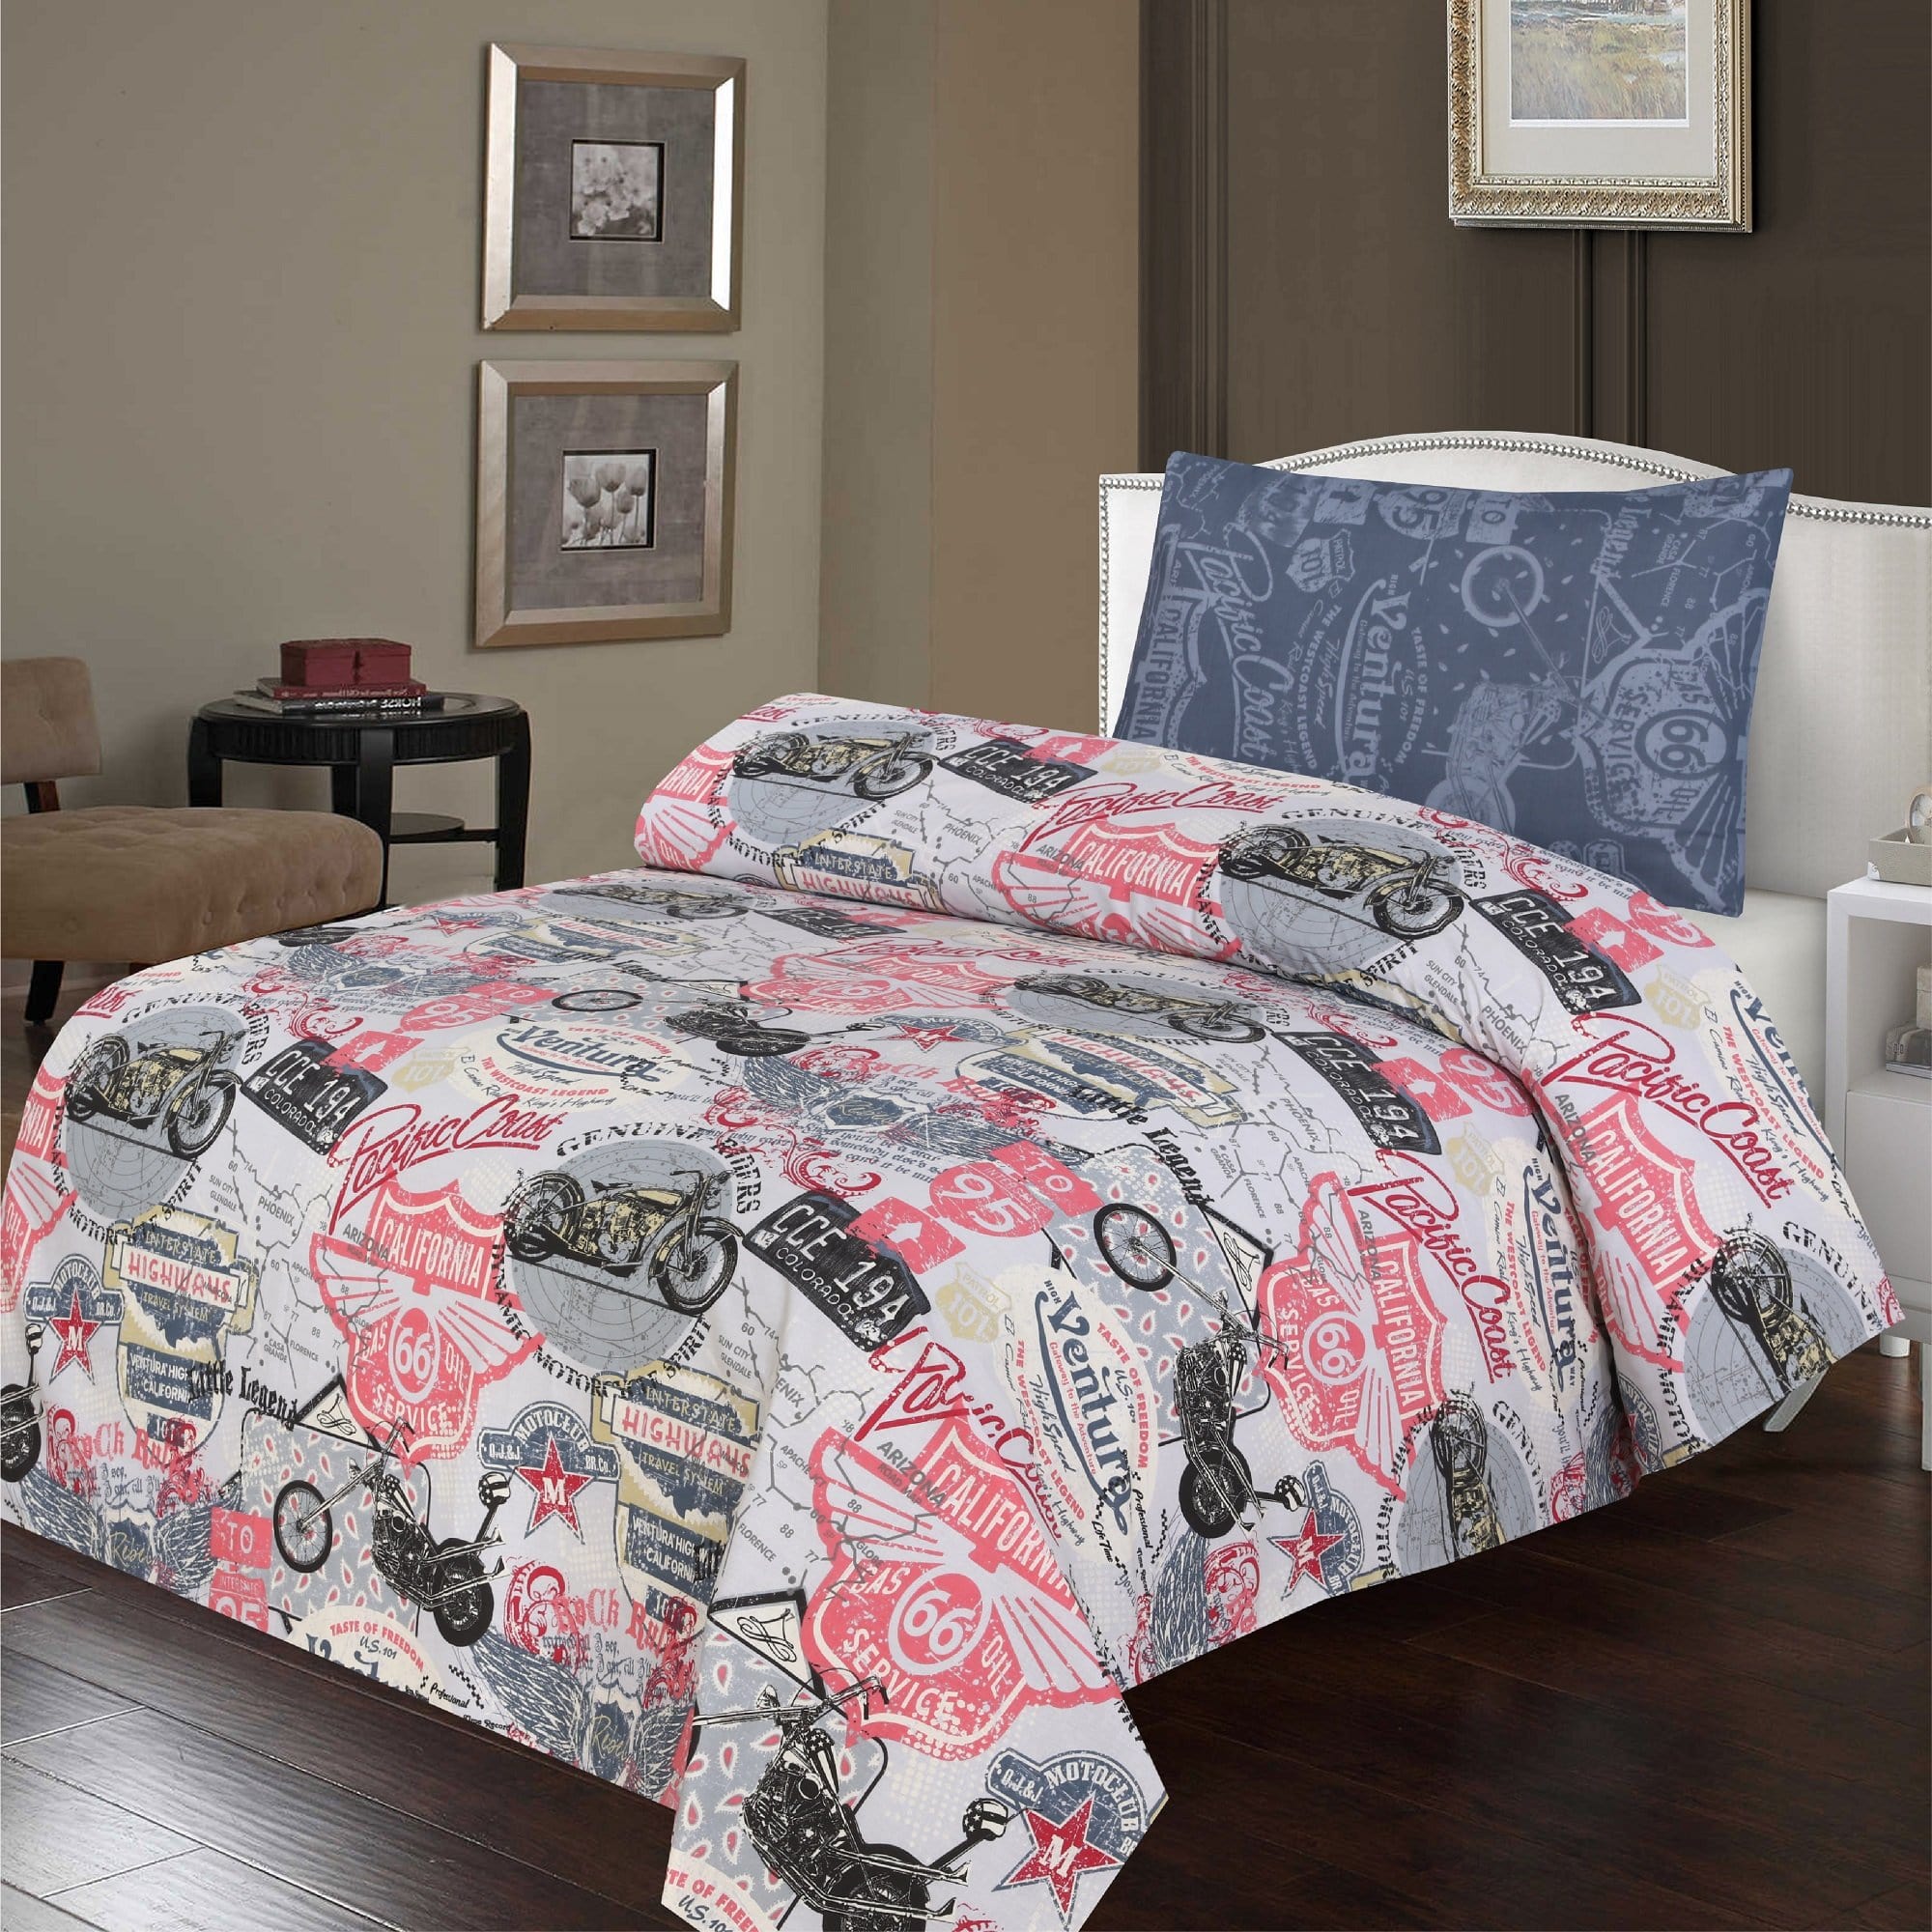 Grace D393-Cotton PC Single Size Bedsheet with 1 Pillow Cover.